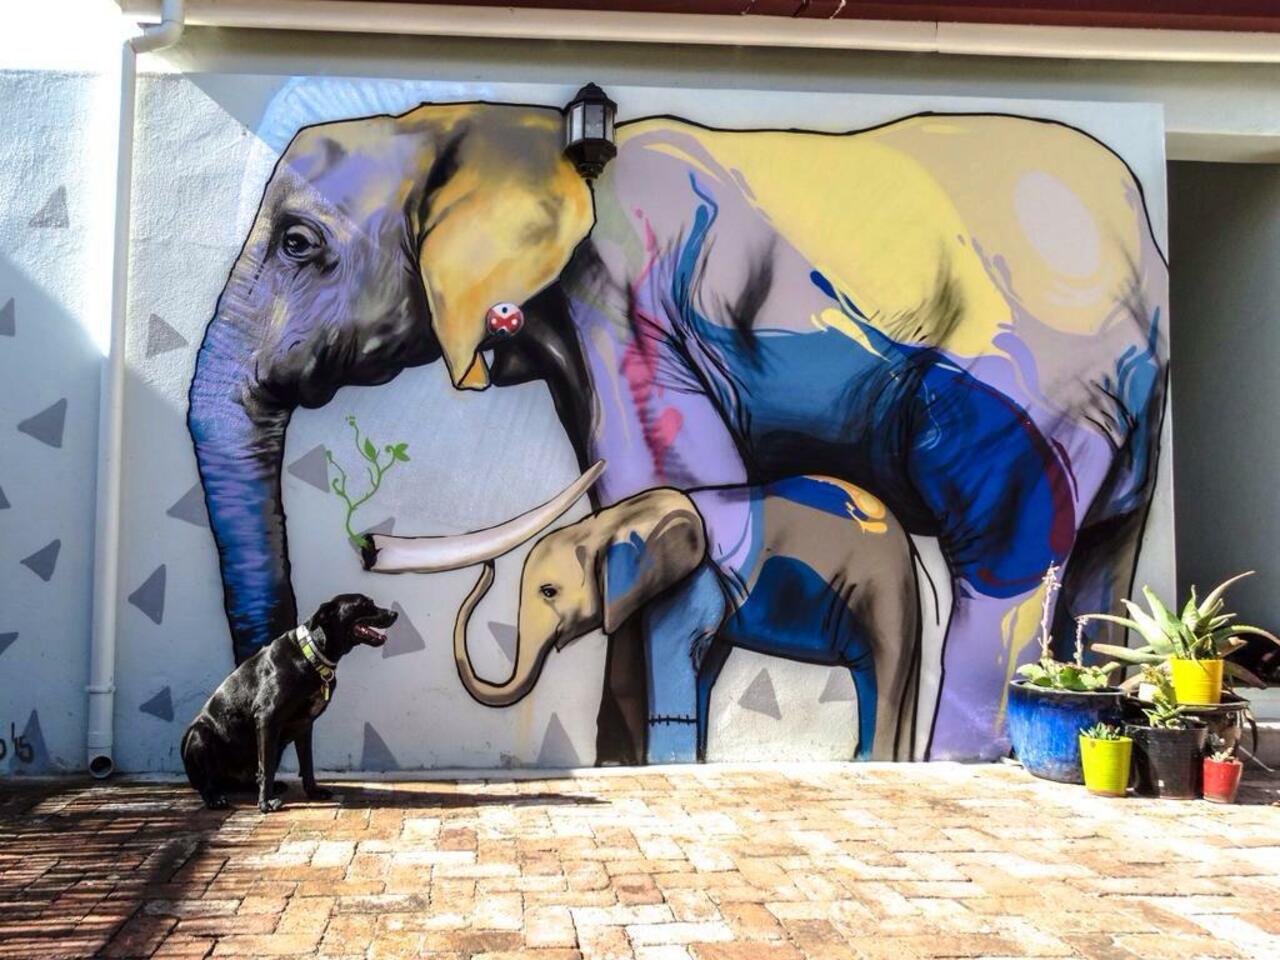 Latest nature in Street Art piece by Falko Paints In Cape Town

#art #mural #graffiti #streetart http://t.co/xC4QYpN4W2